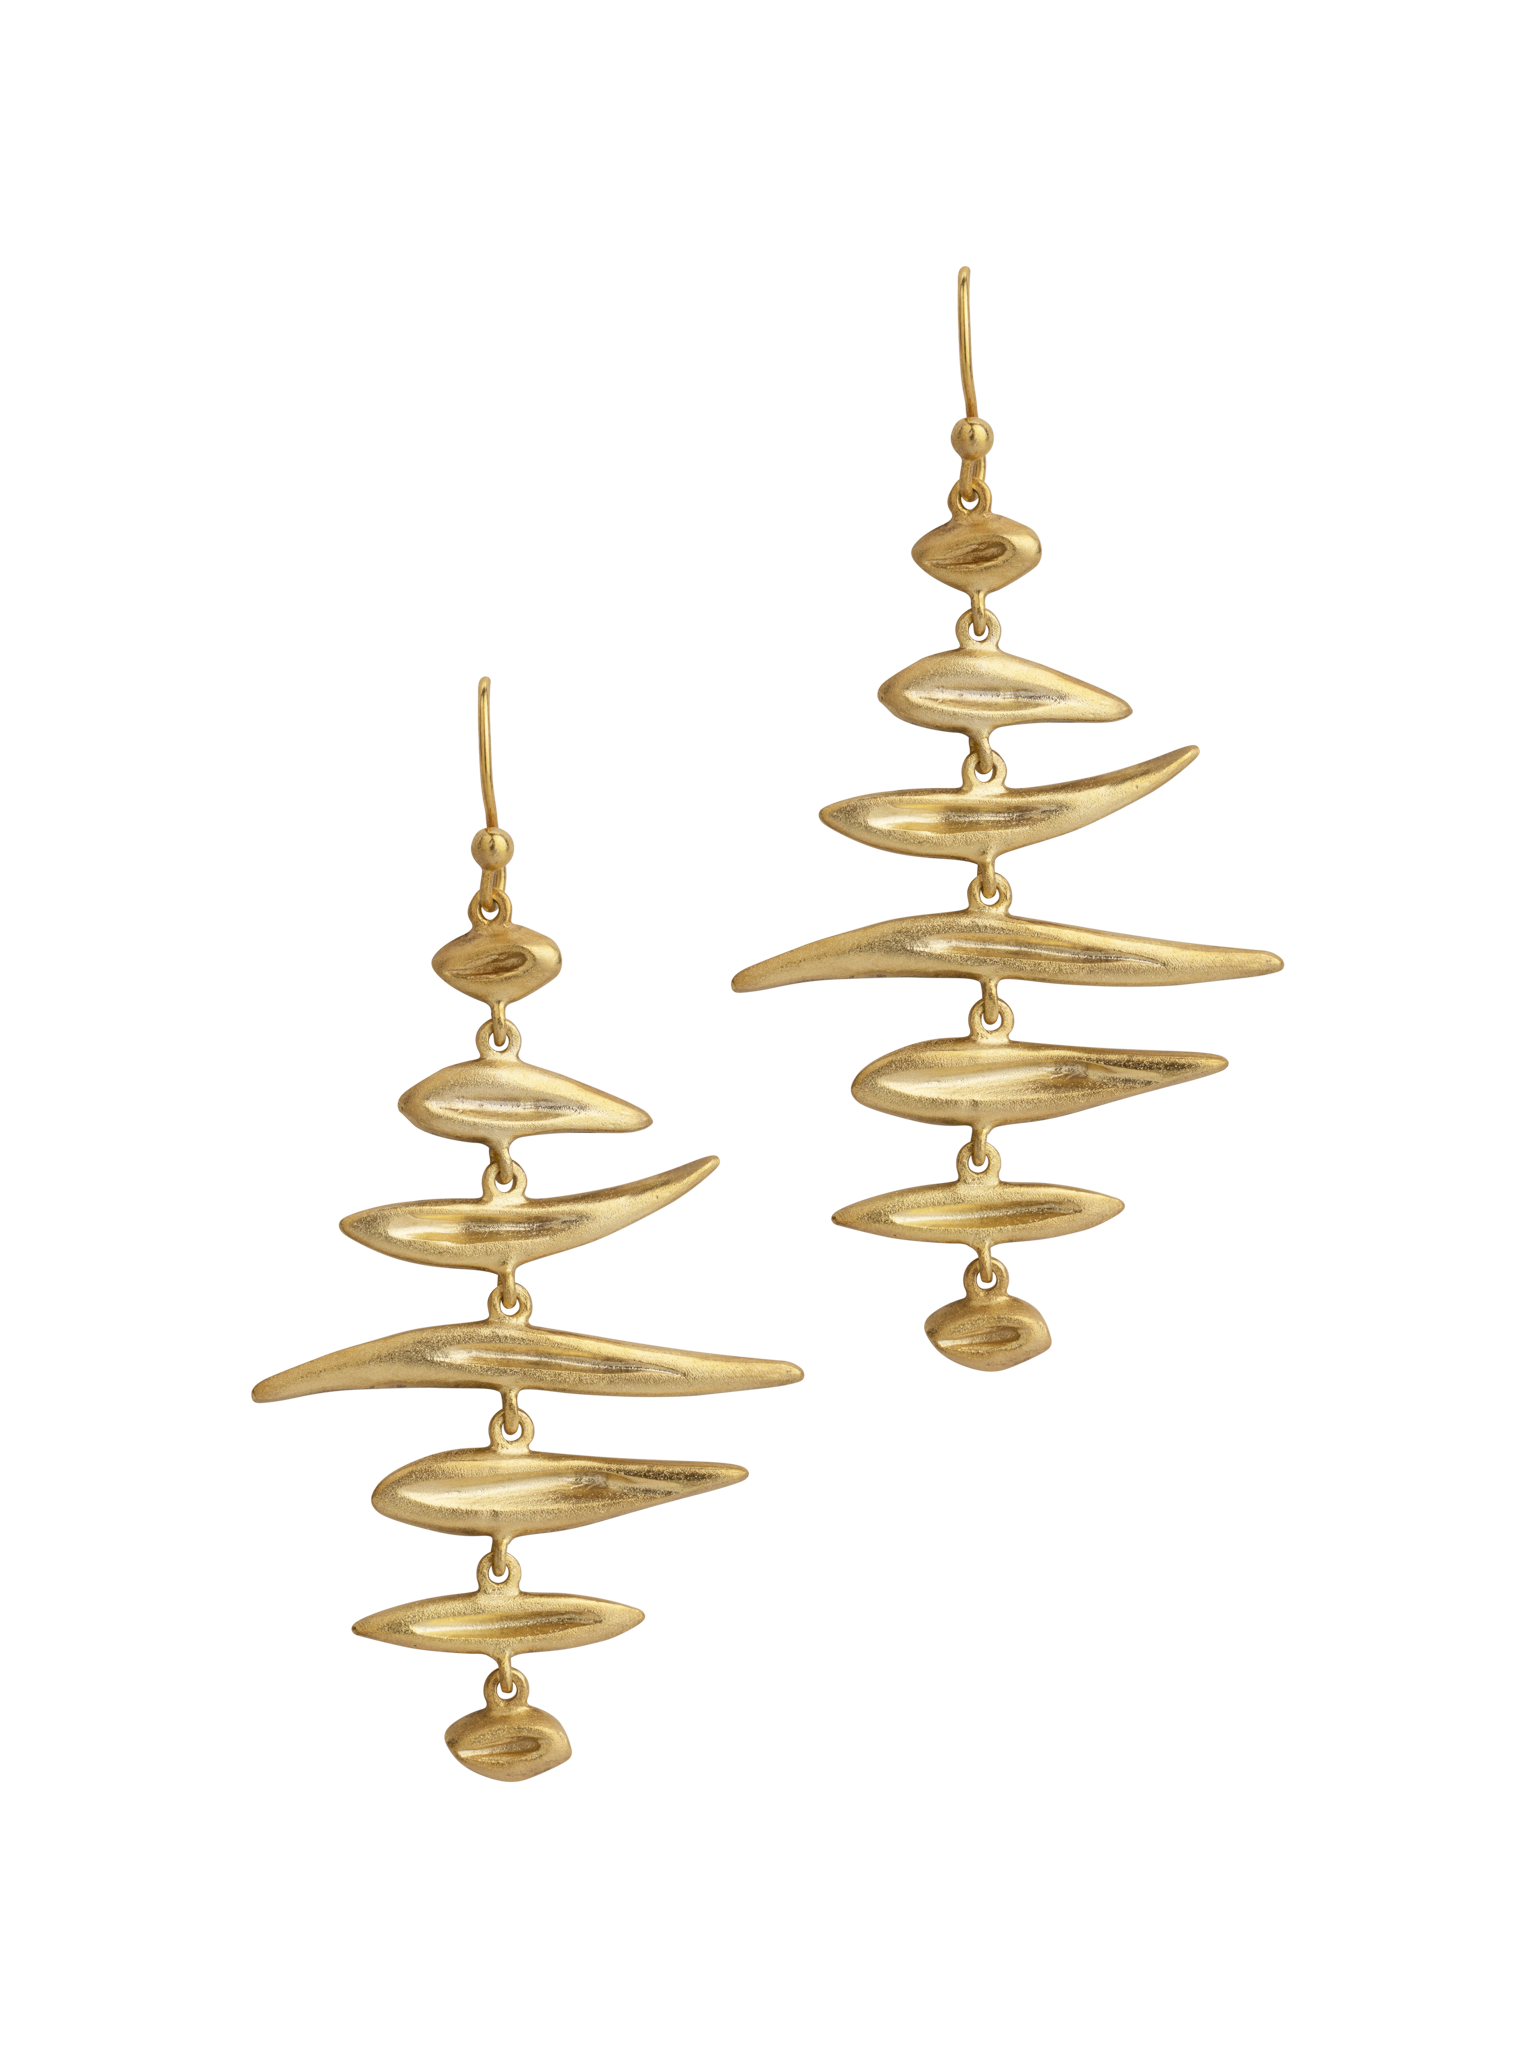 Leaves fishbone chandelier earrings